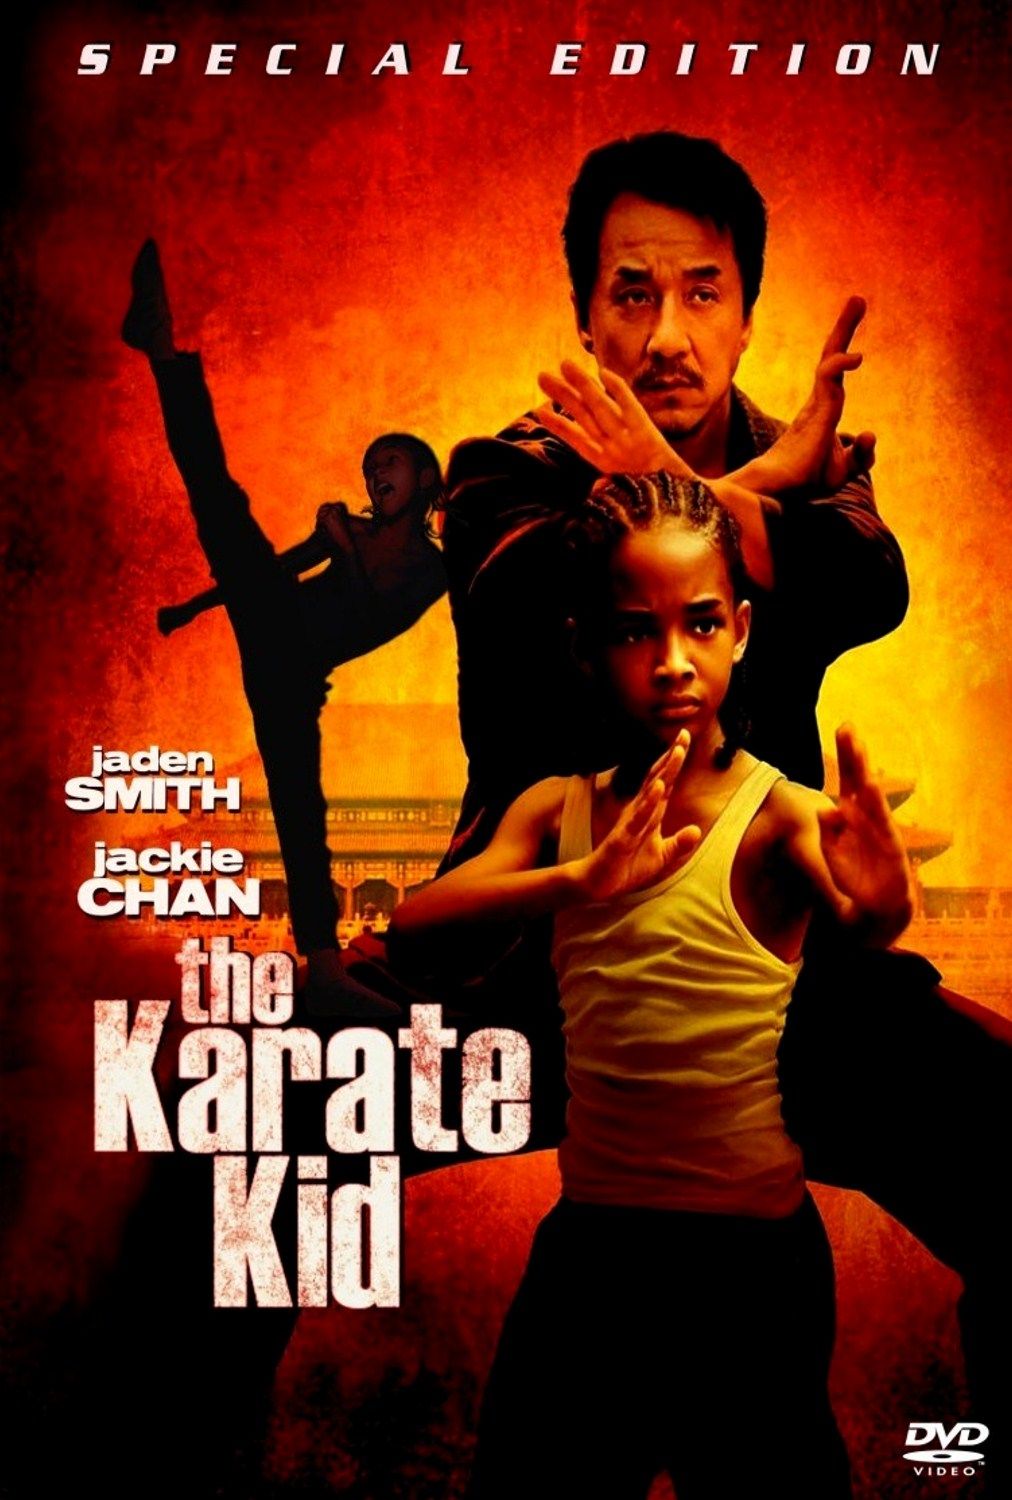 The Karate Kid 2010 Full Movie In Hindi Watch Online - tvlasopa